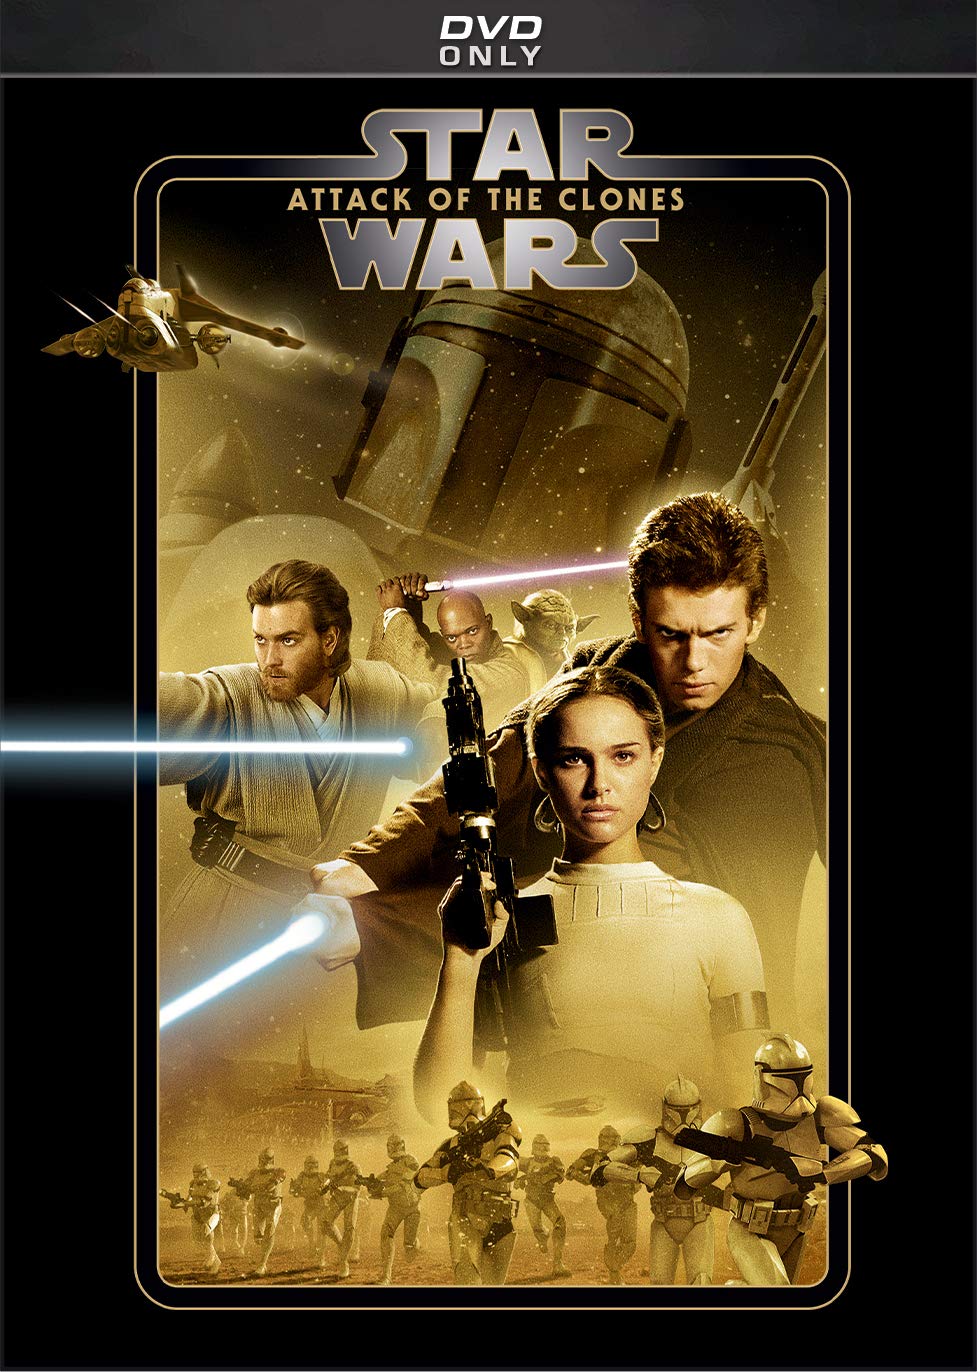 Star Wars Episode Ii Attack Of The Clones Dvd Release Date